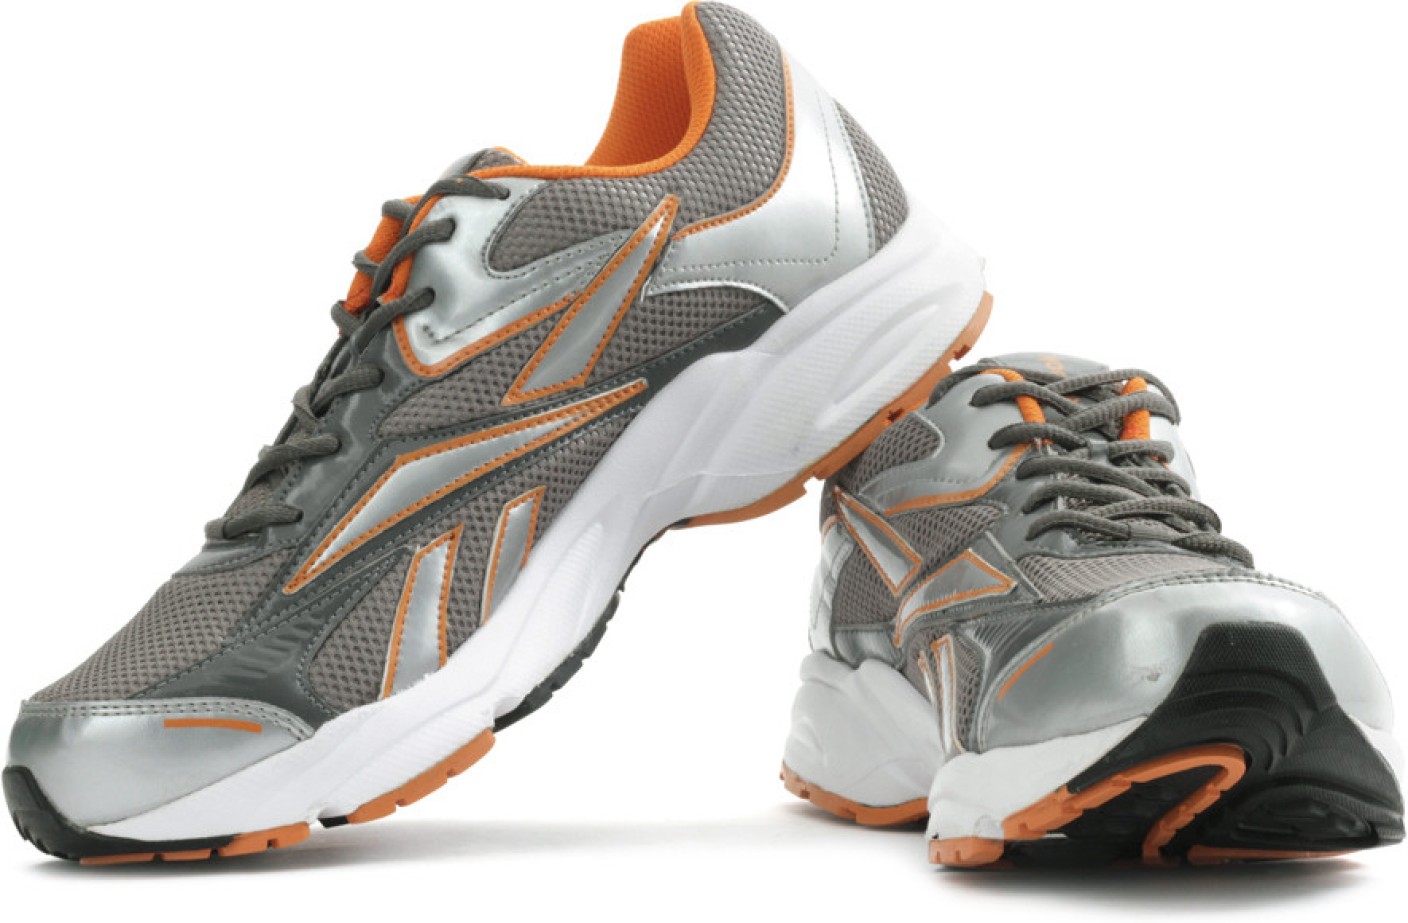 Reebok Fusion Runner II Lp Running Shoes For Men - Buy Grey, Orange ...